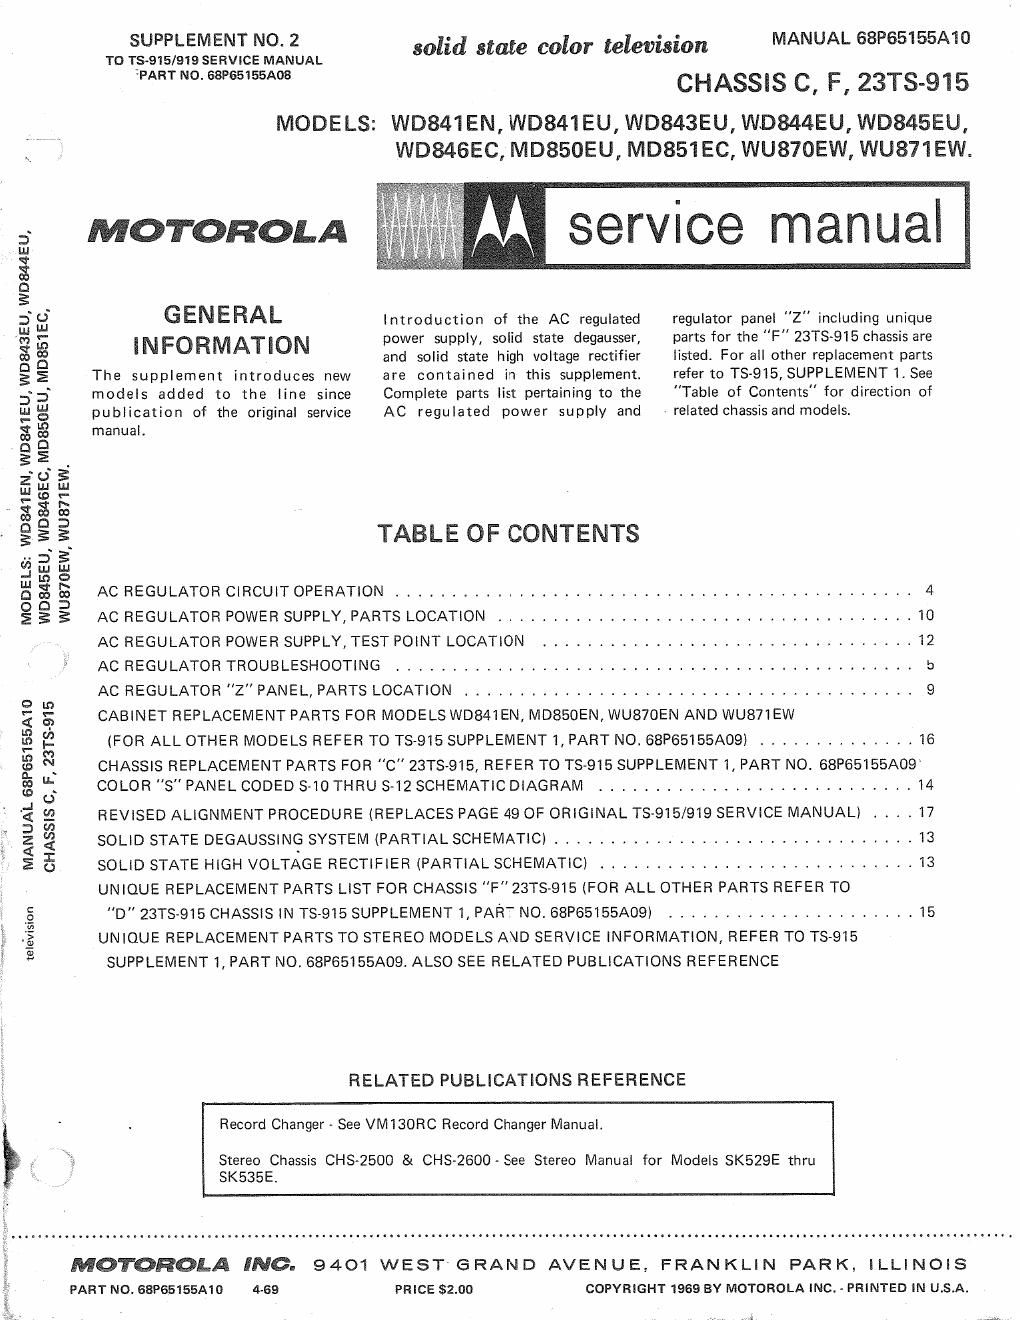 motorola wd 841 eu service manual